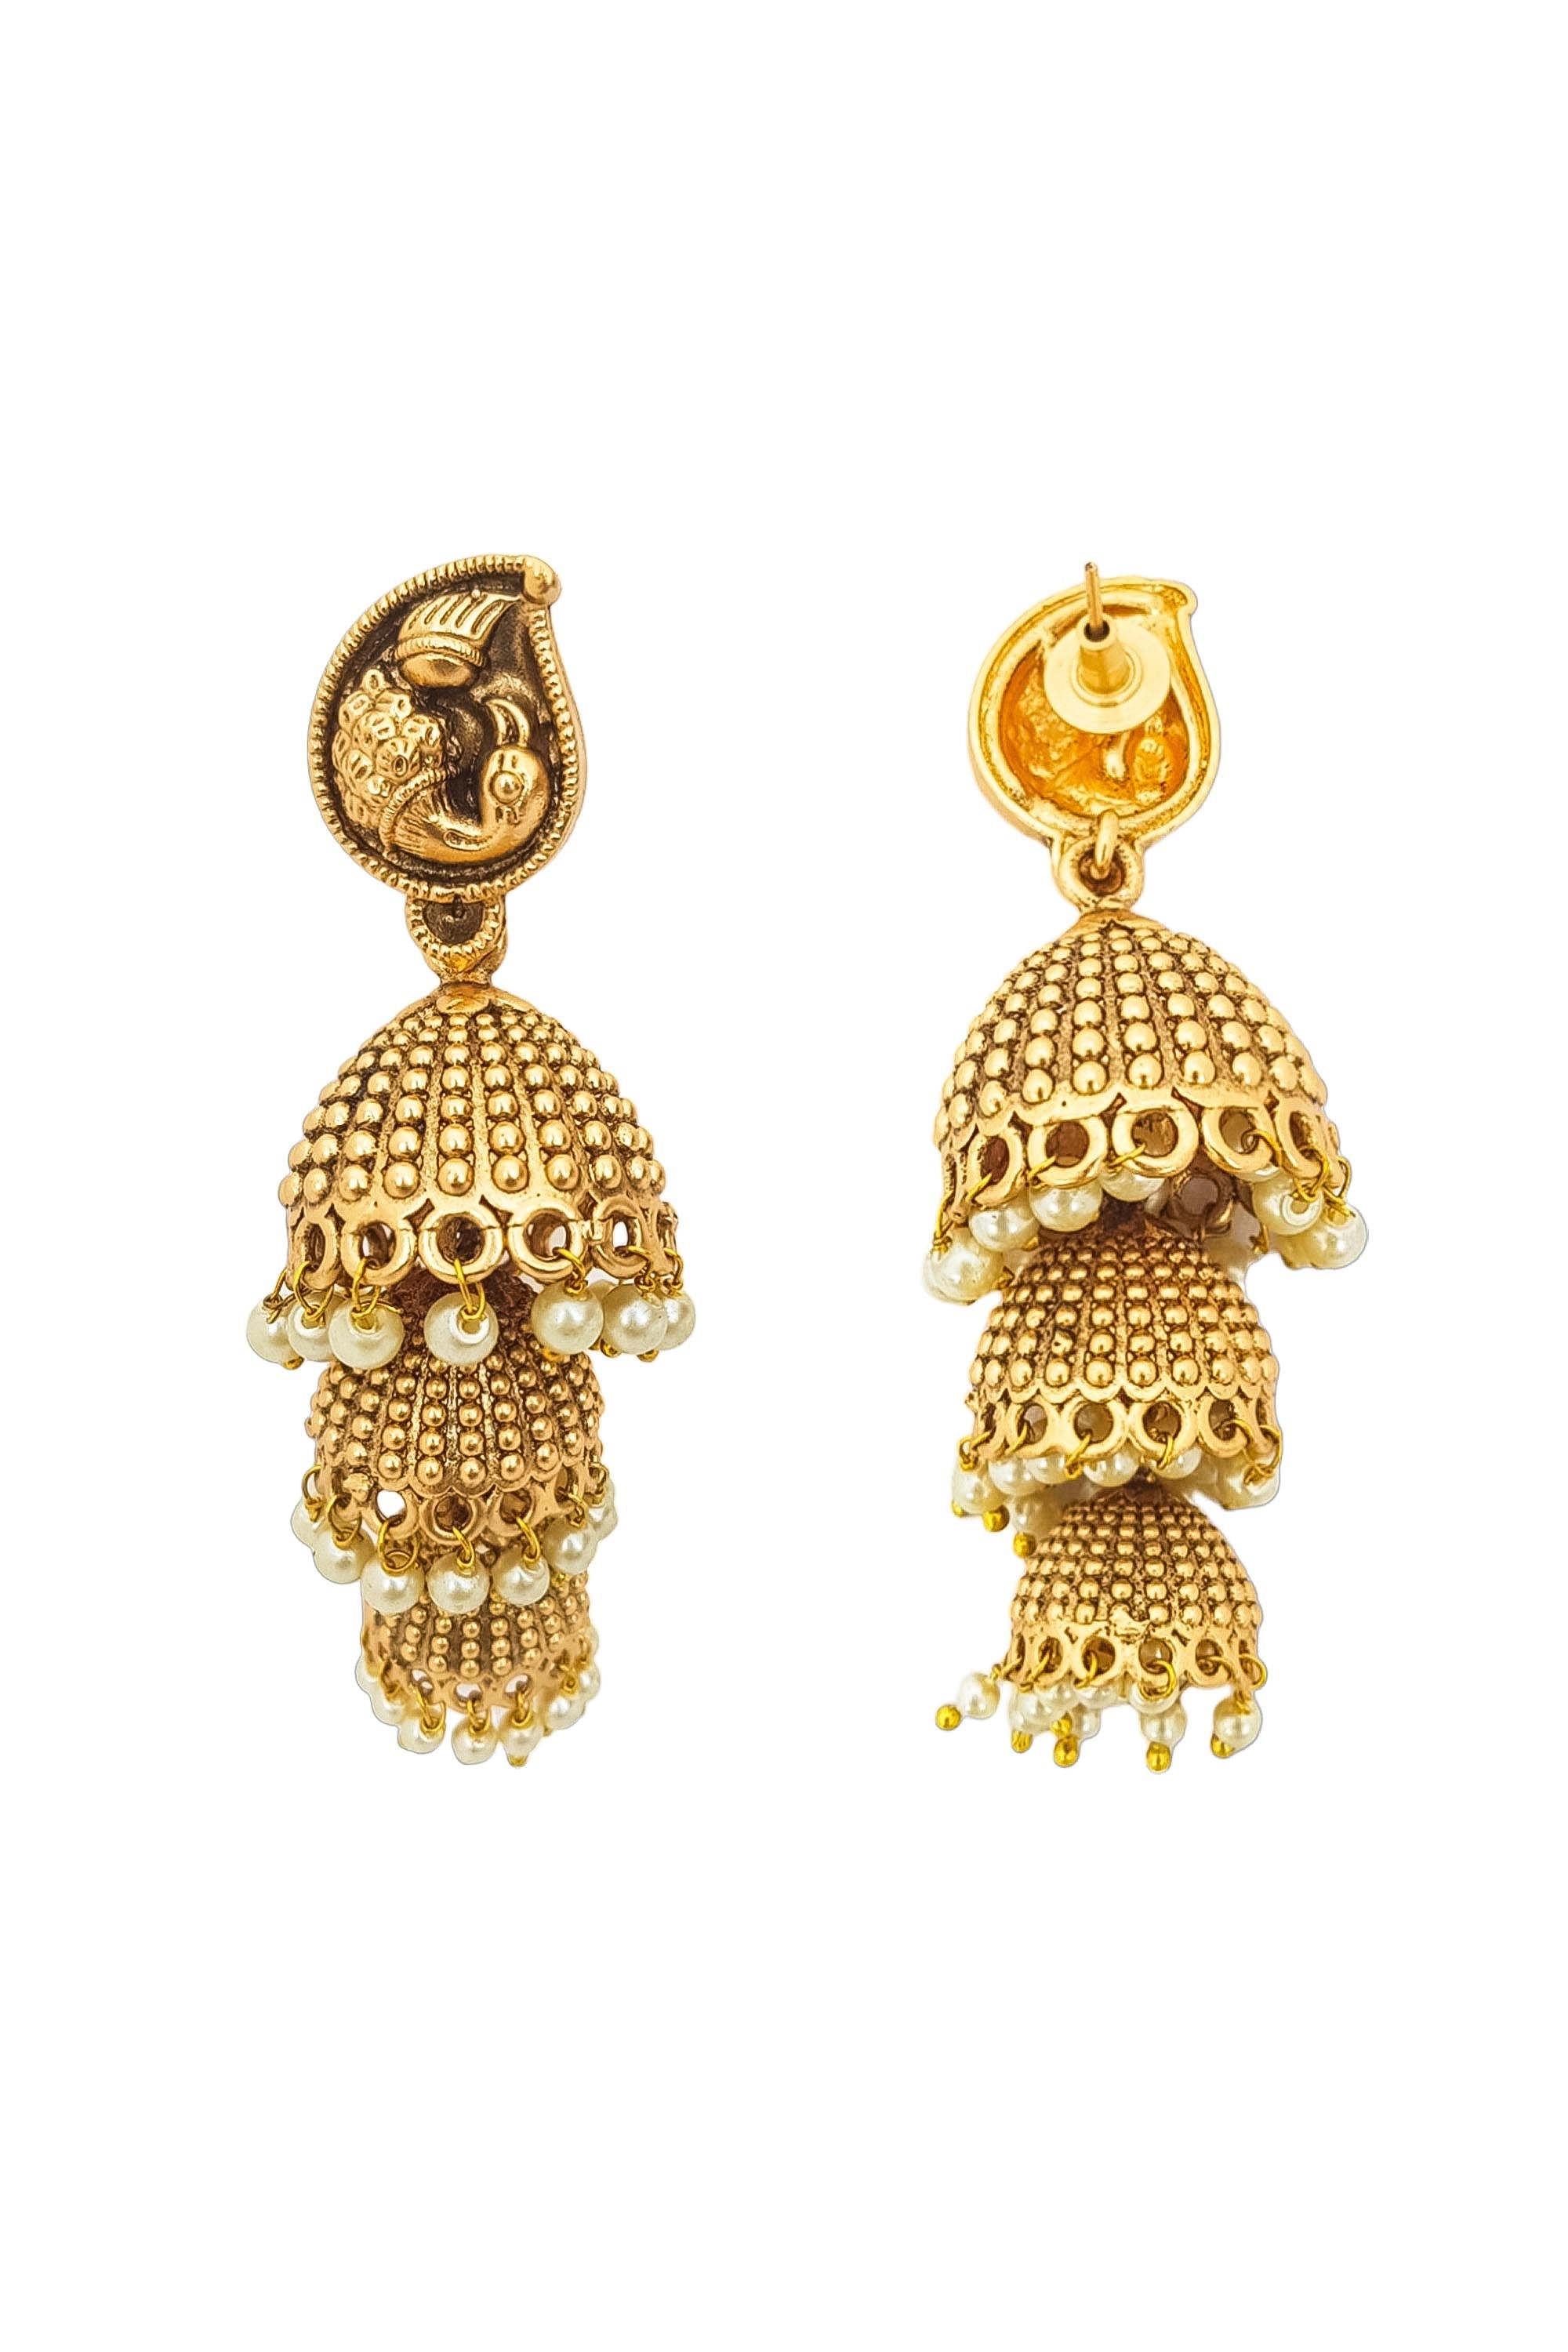 Designer Temple earrings Jhumkar 17063N